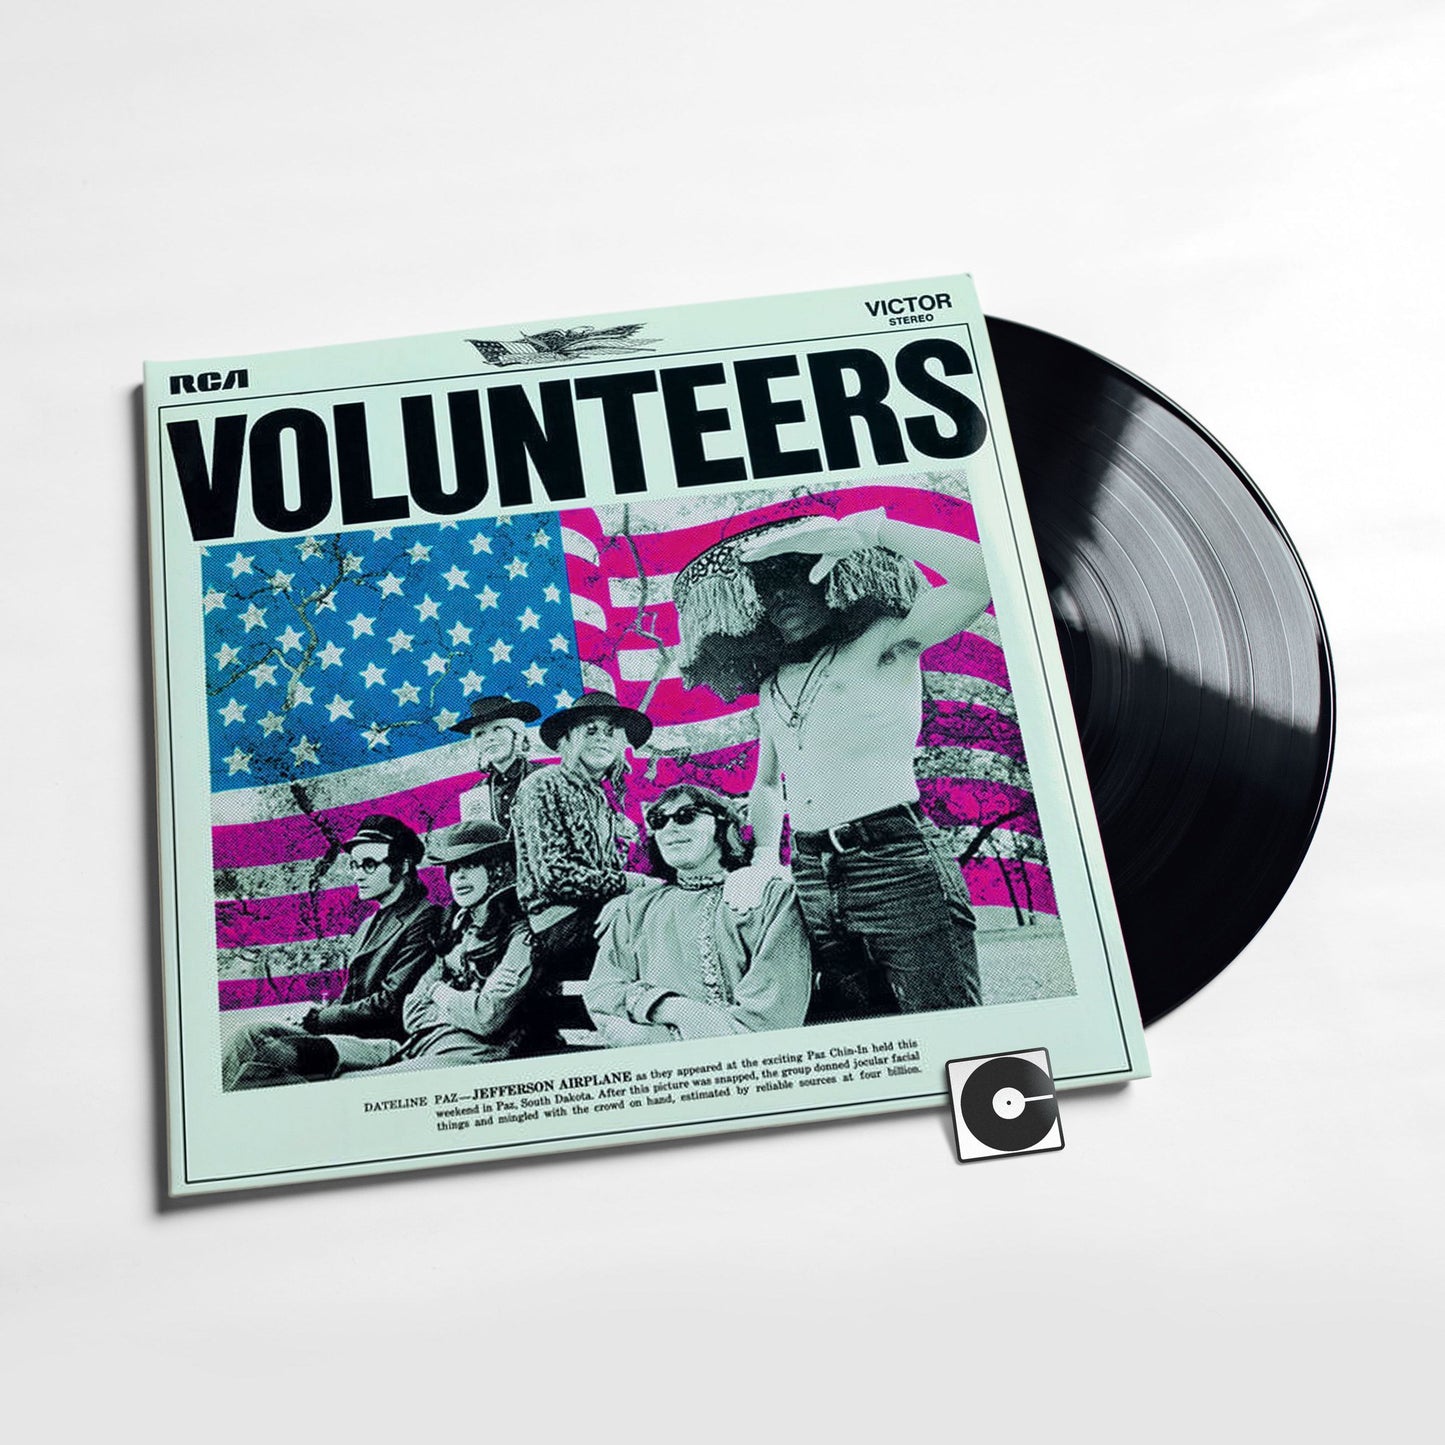 Jefferson Airplane - "Volunteers"